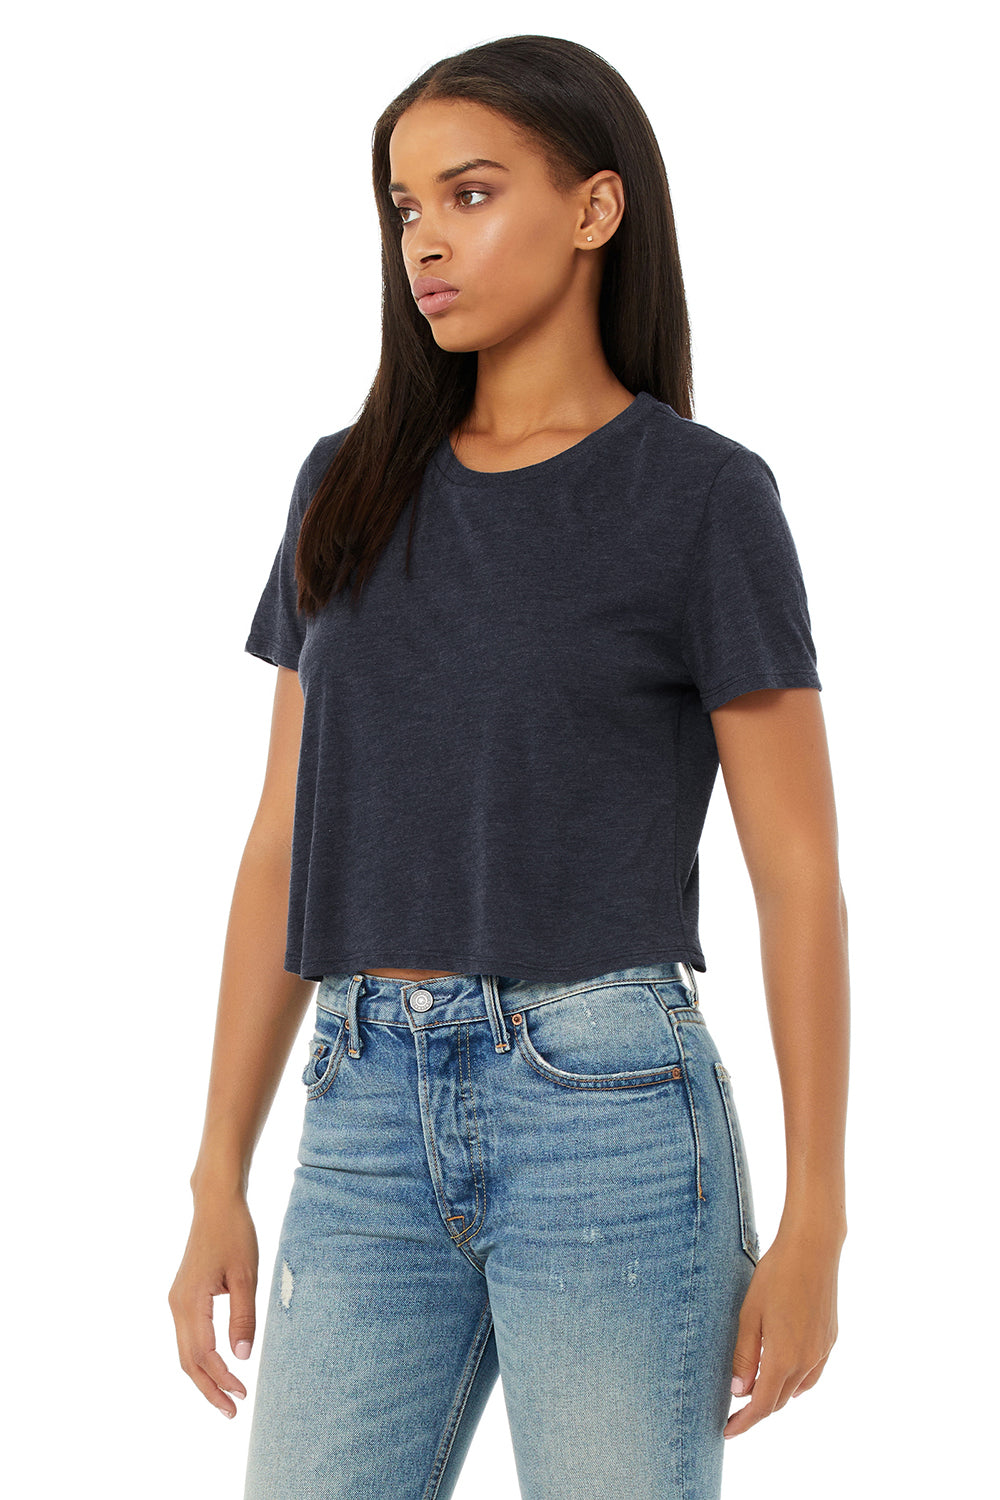 Bella + Canvas B8882/8882 Womens Flowy Cropped Short Sleeve Crewneck T-Shirt Heather Navy Blue Model 3Q